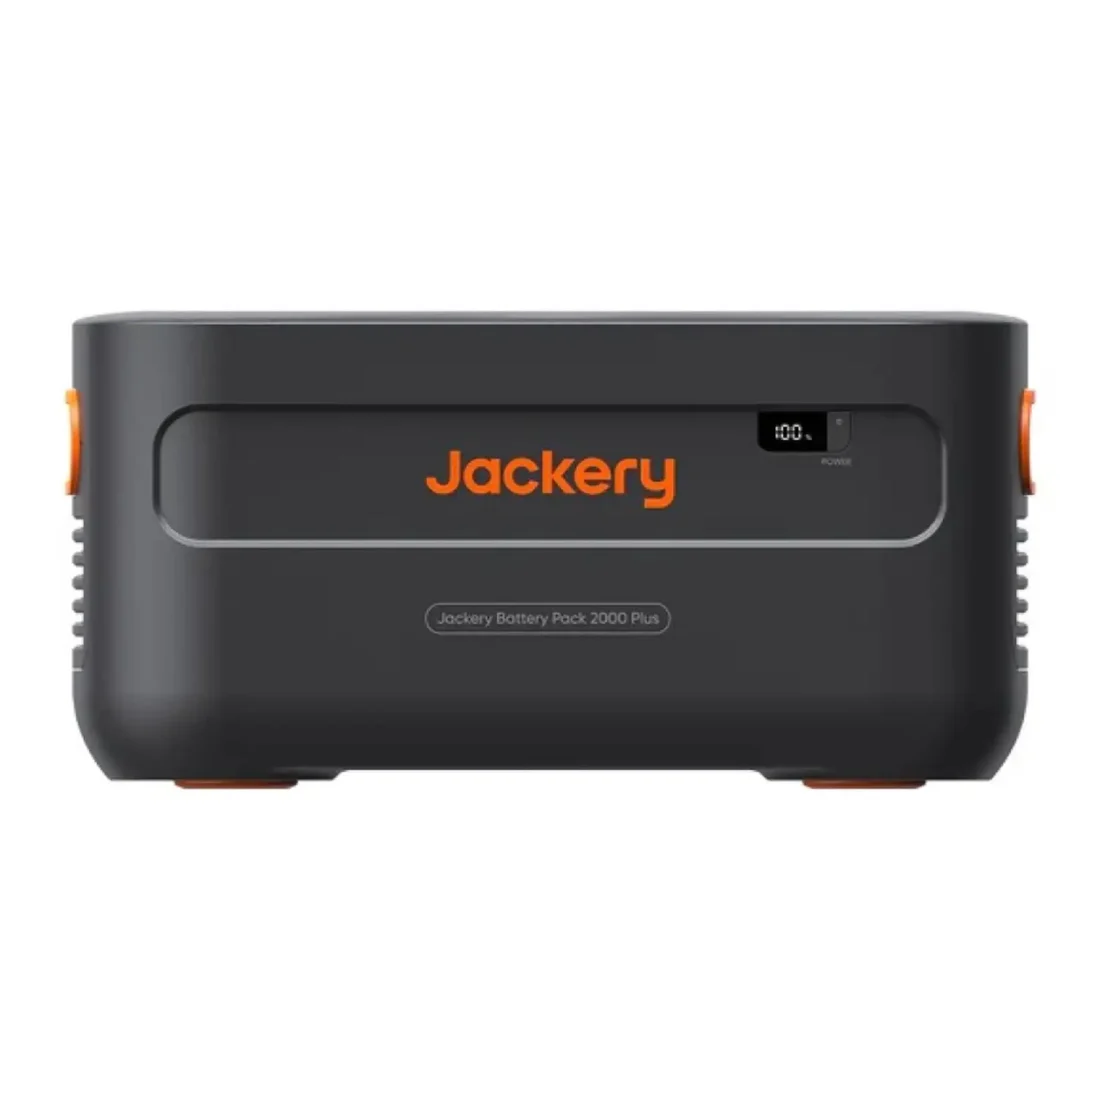 Jackery Explorer 2000 Plus + Jackery Battery Pack 2000 Plus